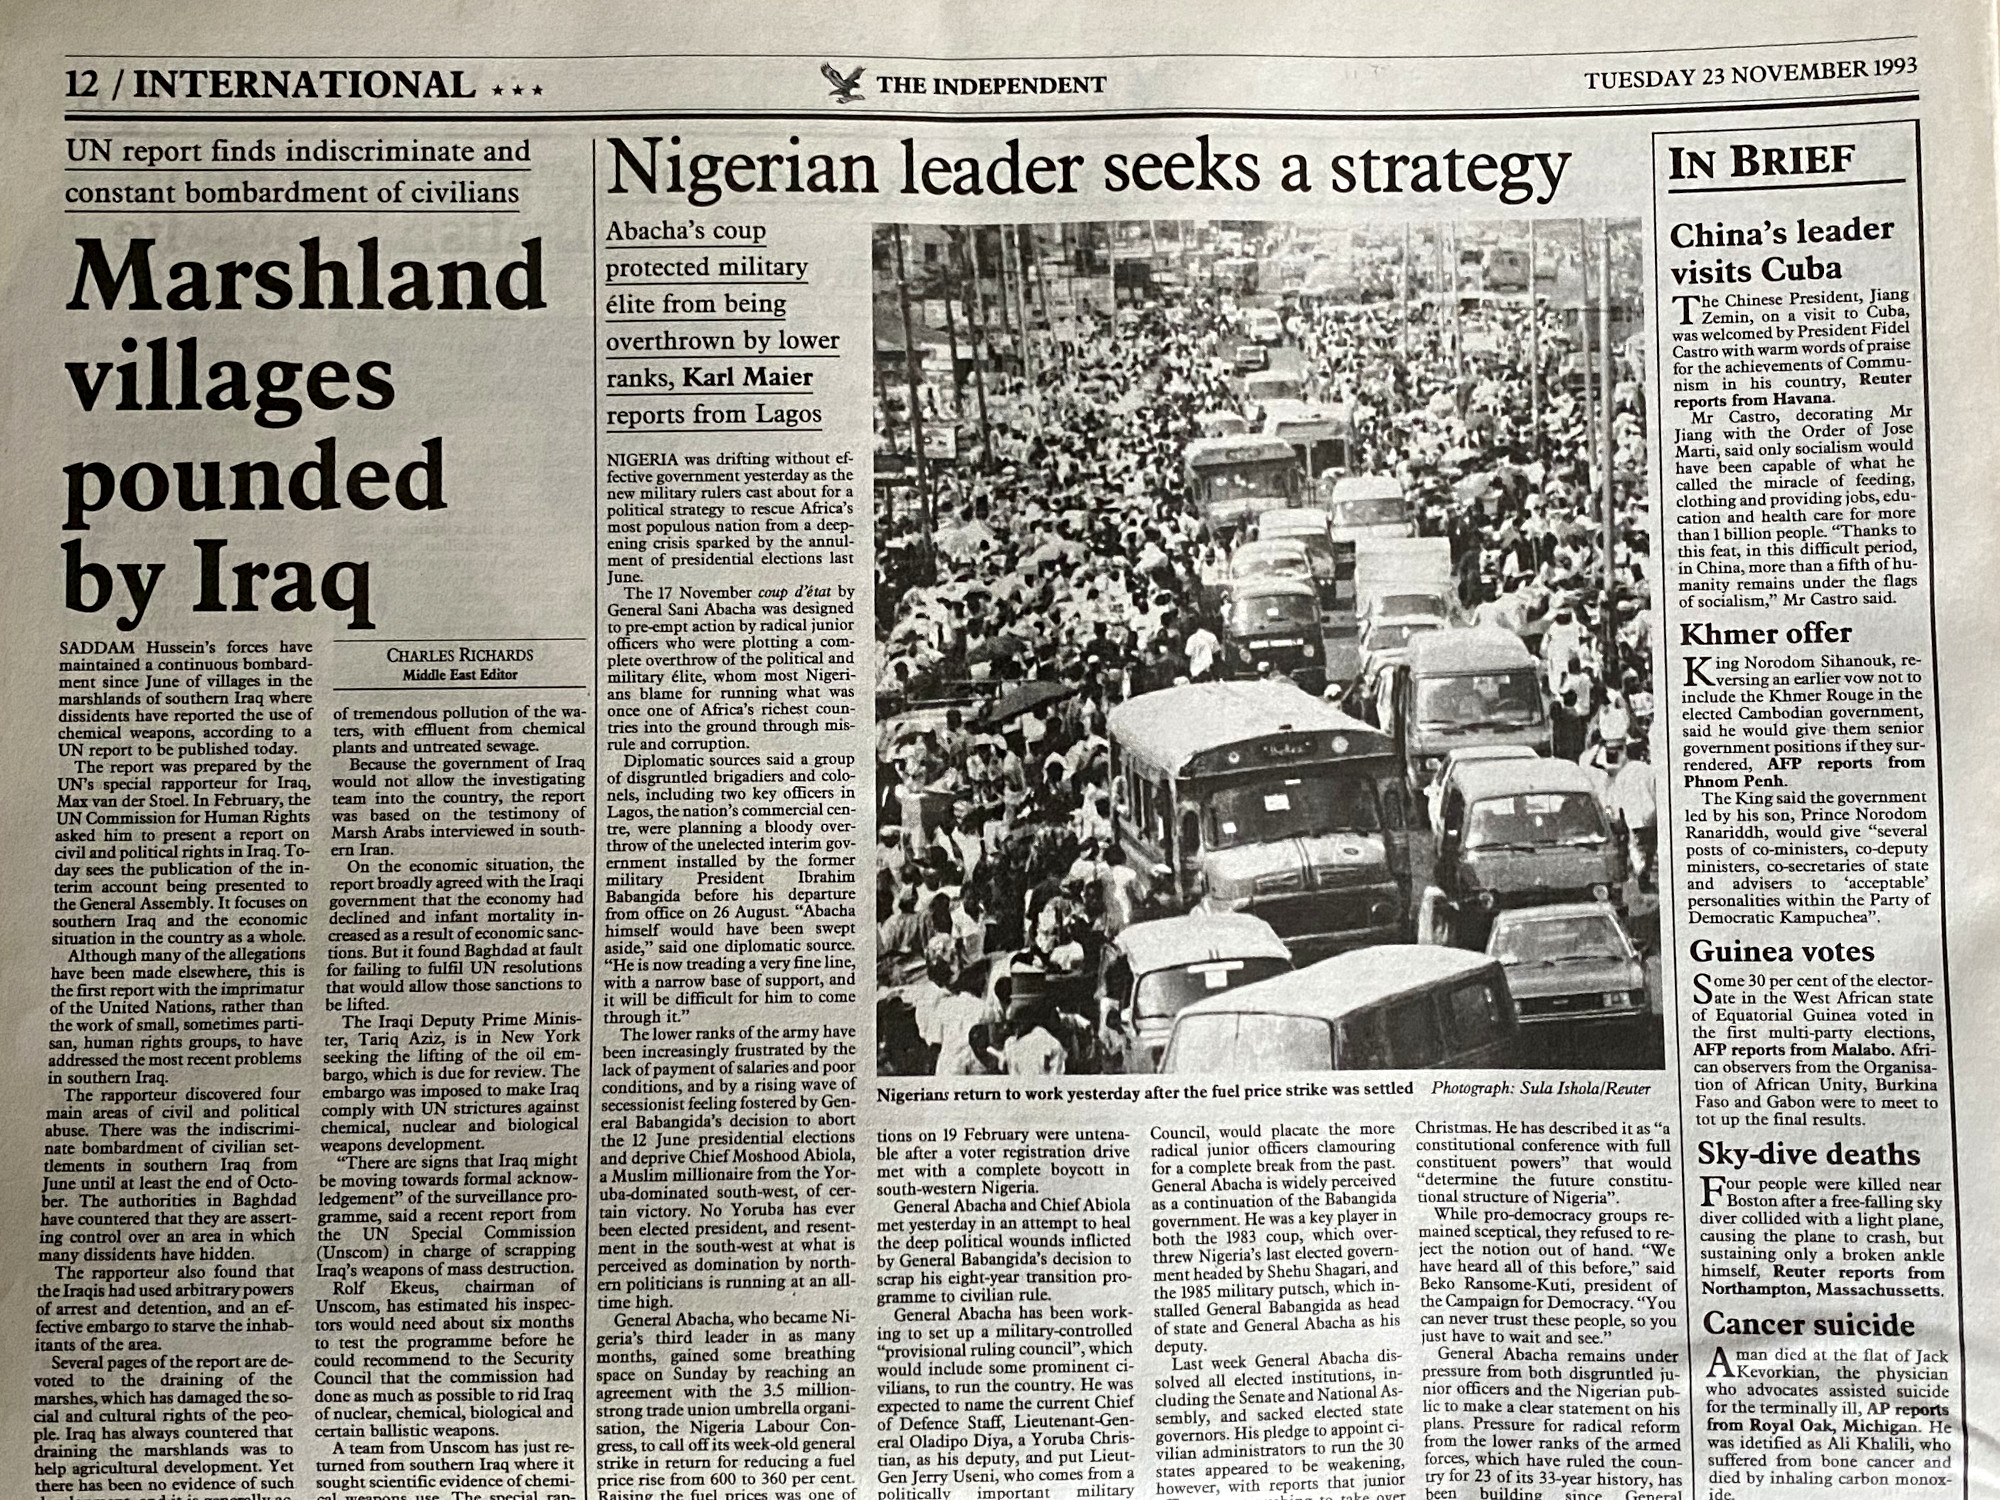 The Independent, 23rd November 1993: headline Nigerian leader seeks a strategy